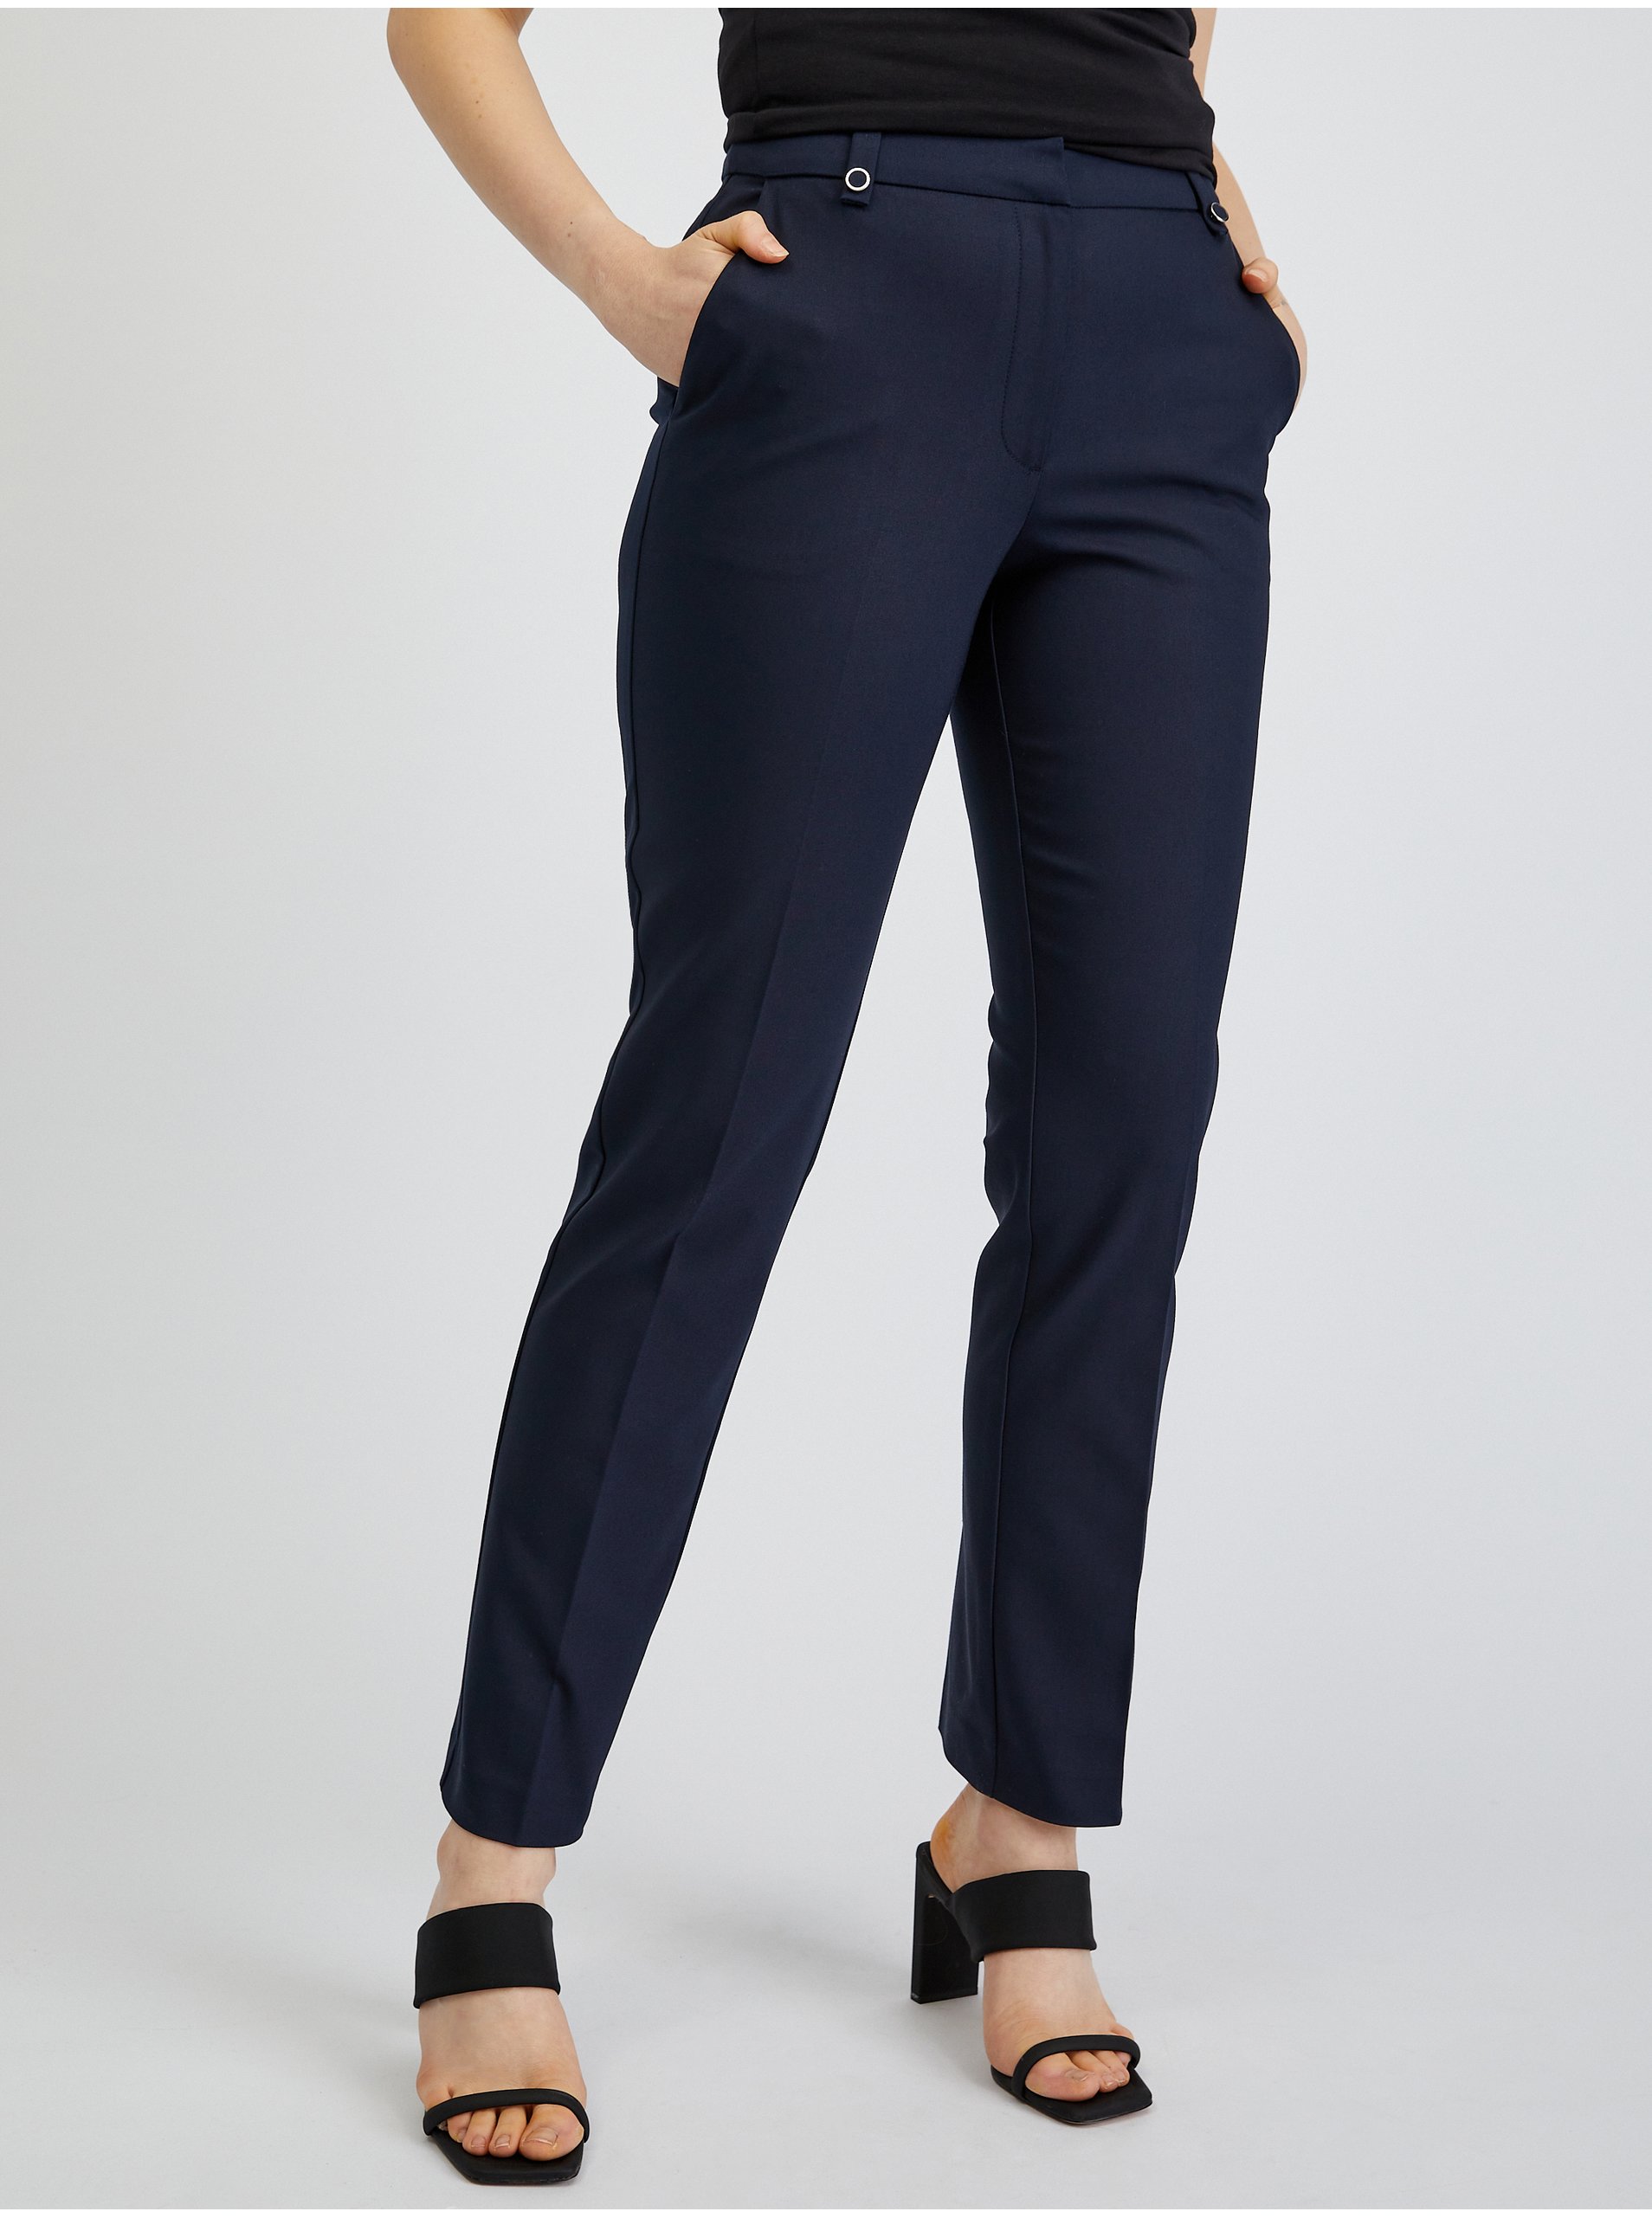 Lacno Elegantné nohavice pre ženy ORSAY - tmavomodrá